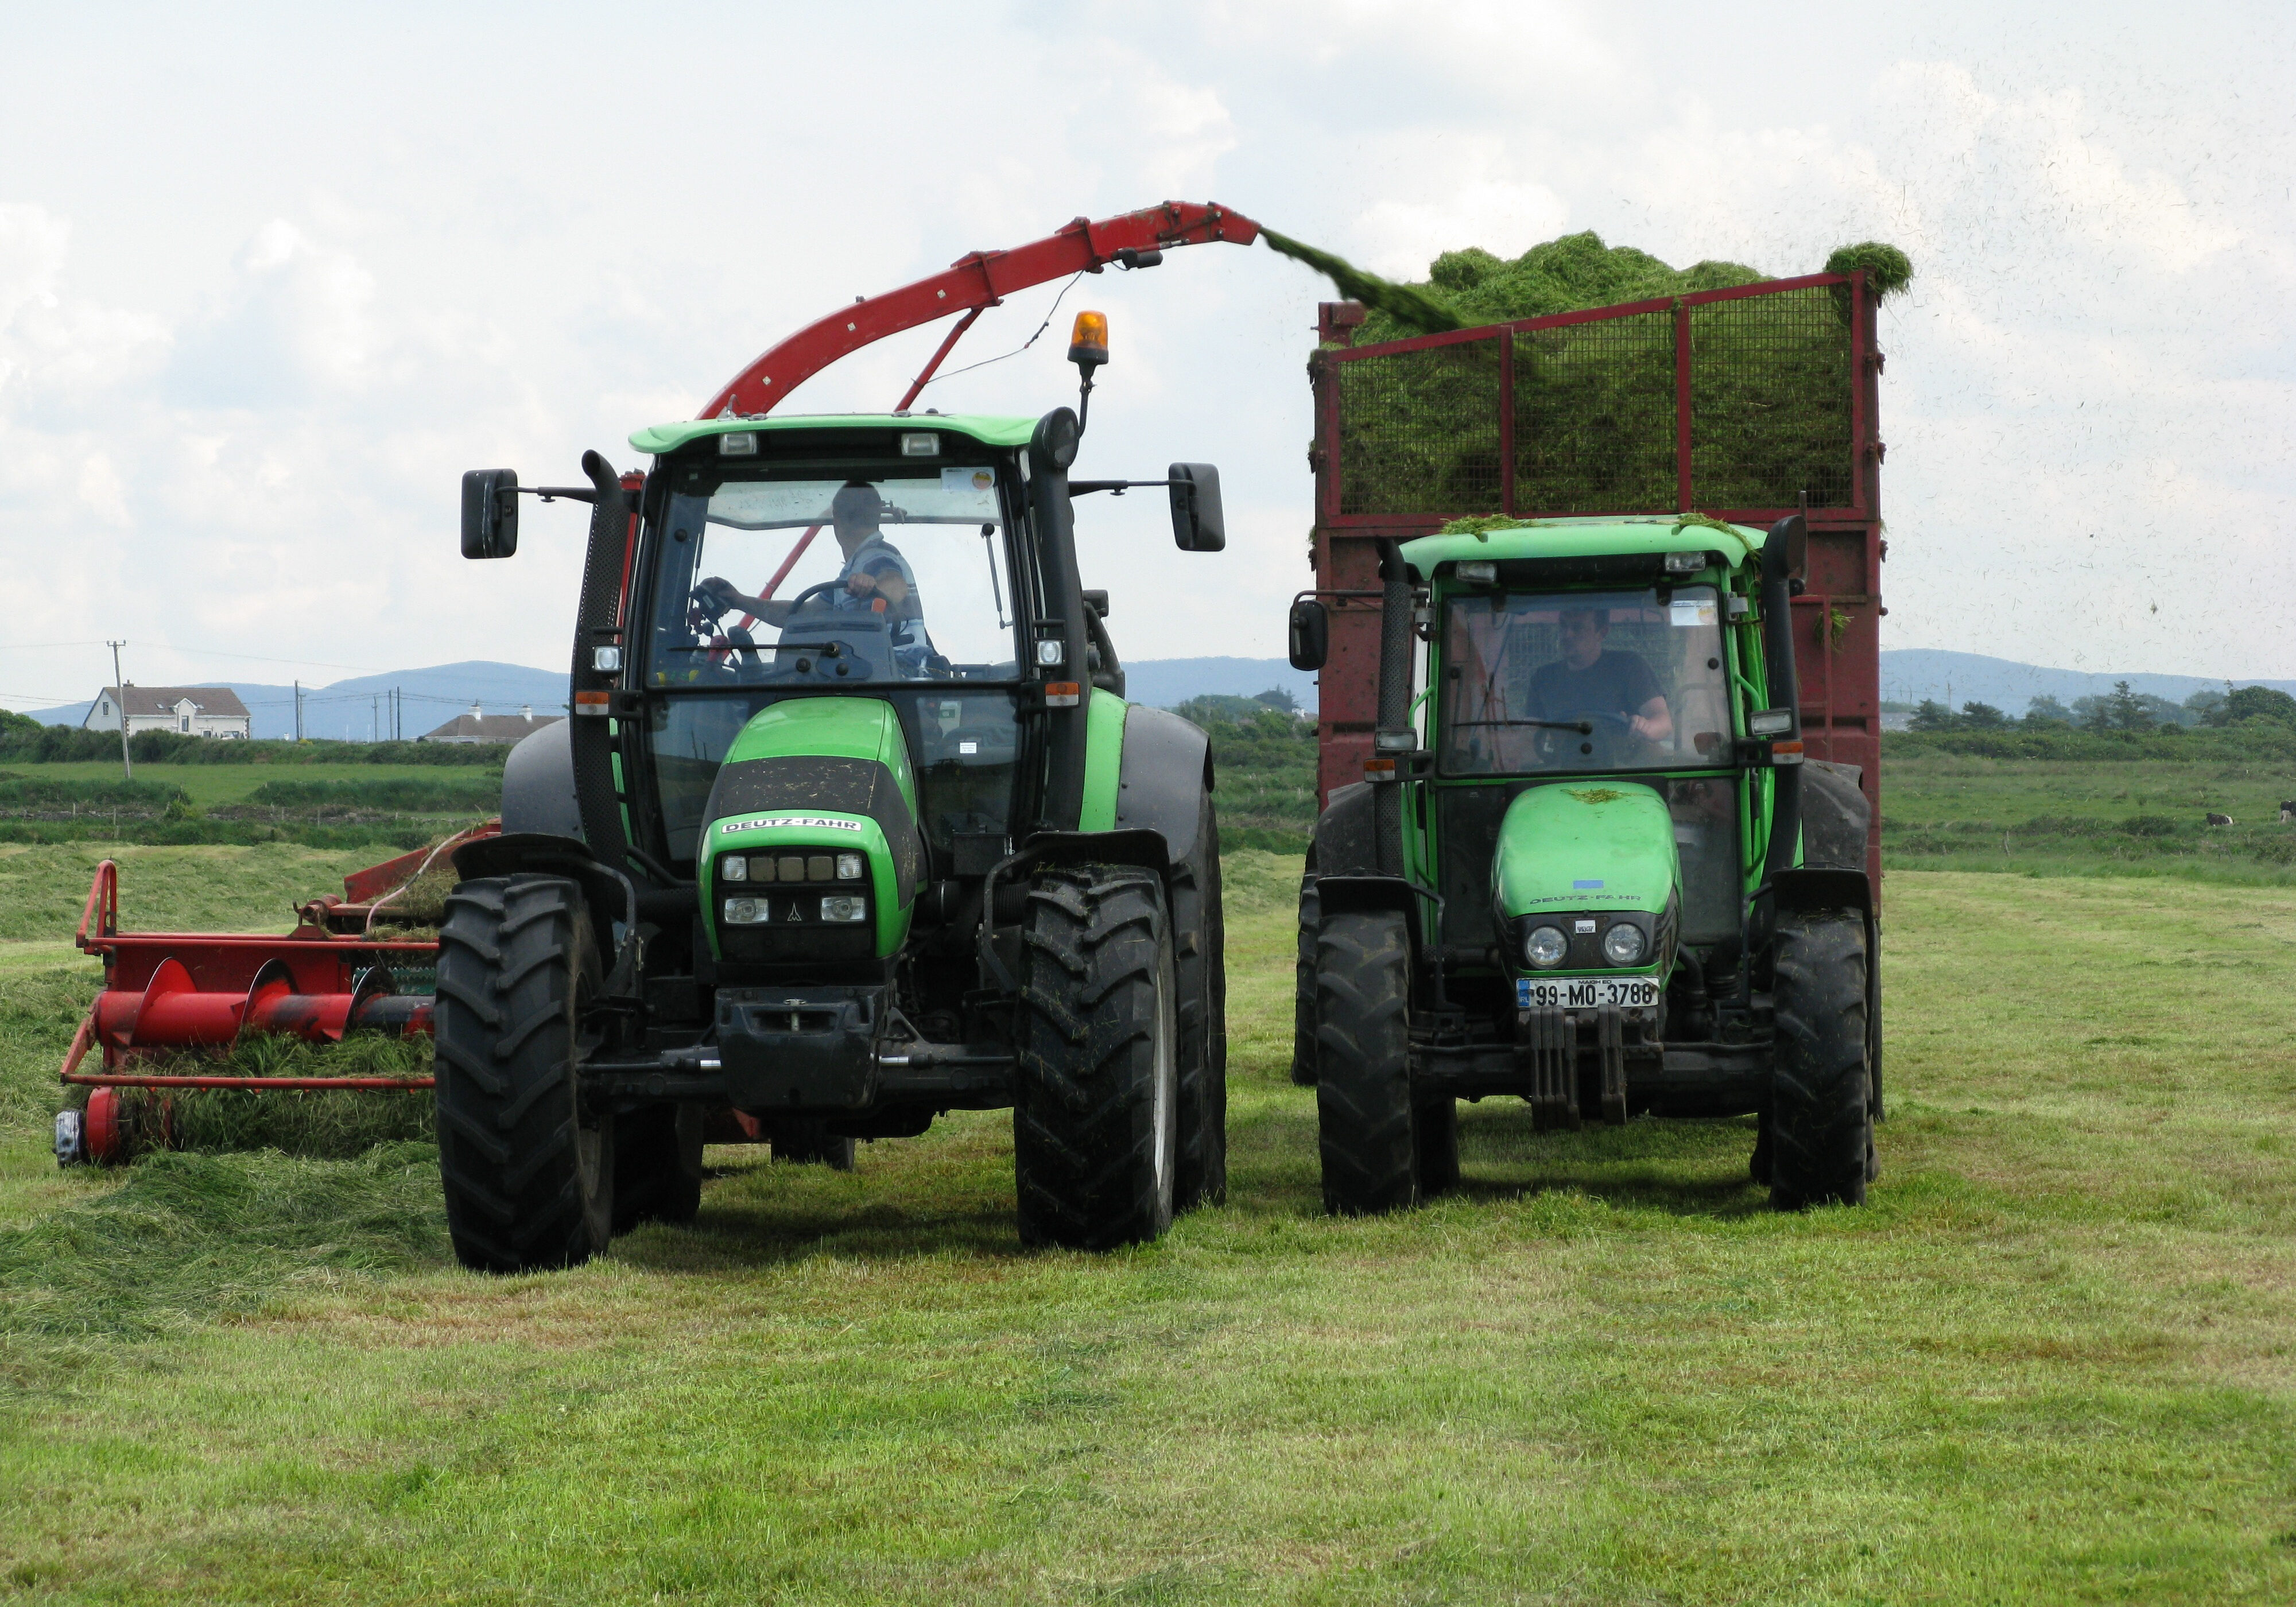 work-grass-tractor-field-farm-meadow-911922-pxhere.com